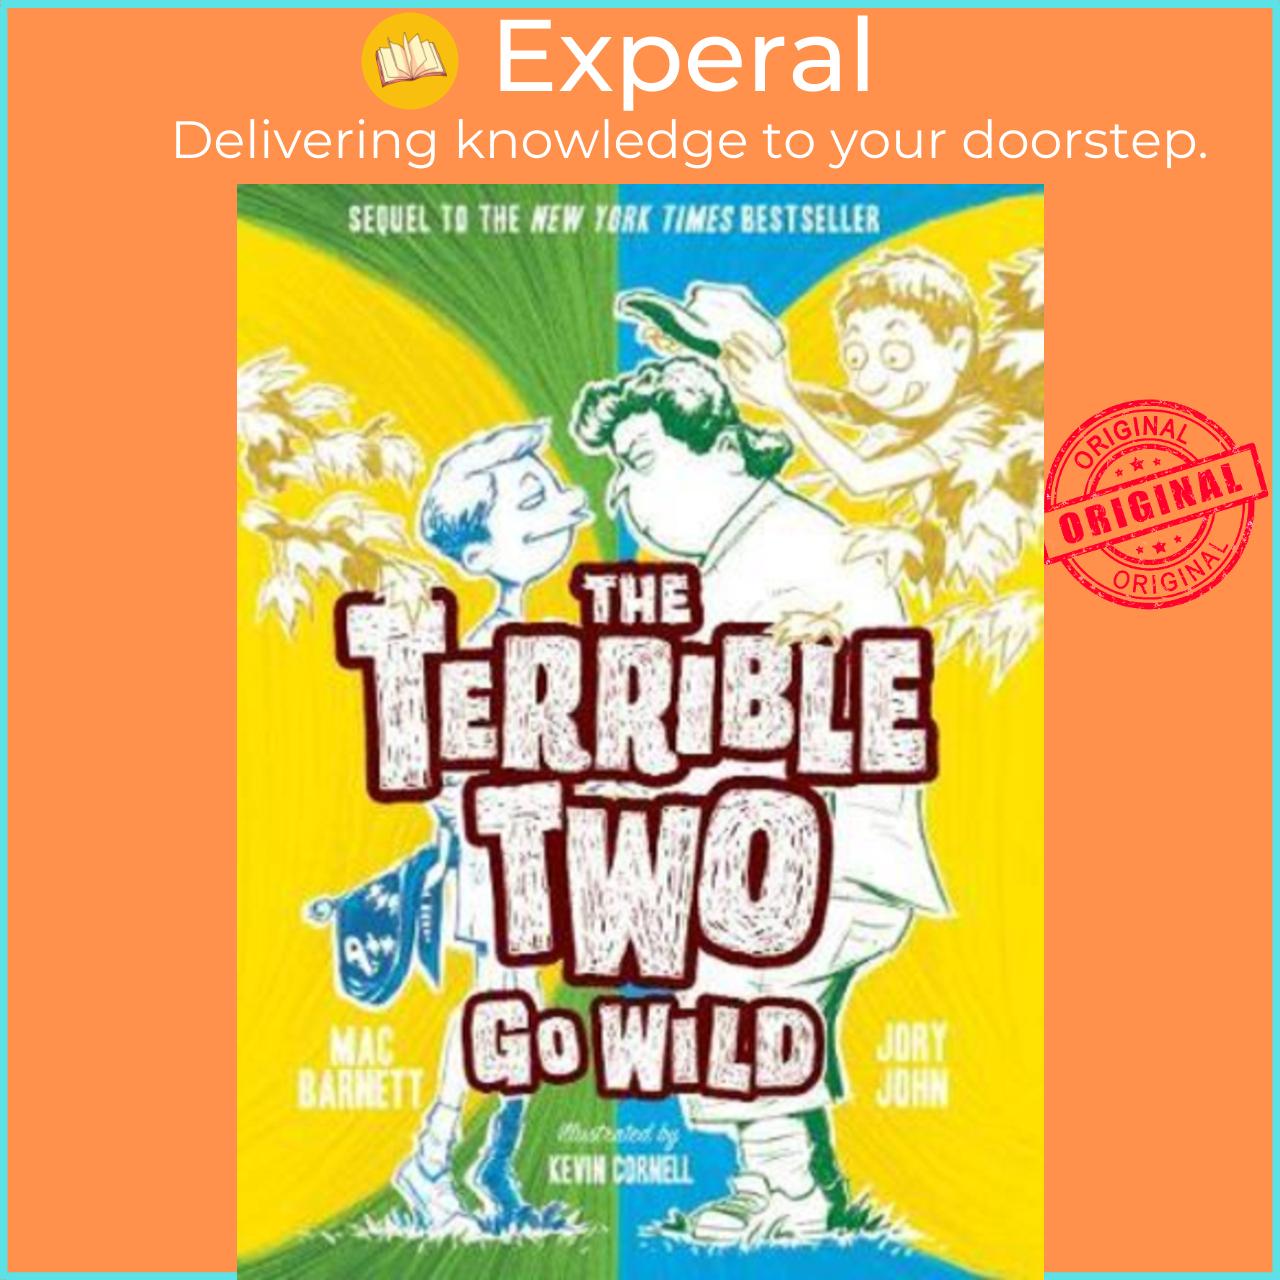 Sách - The Terrible Two Go Wild by Mac Barnett Jory John (US edition, paperback)